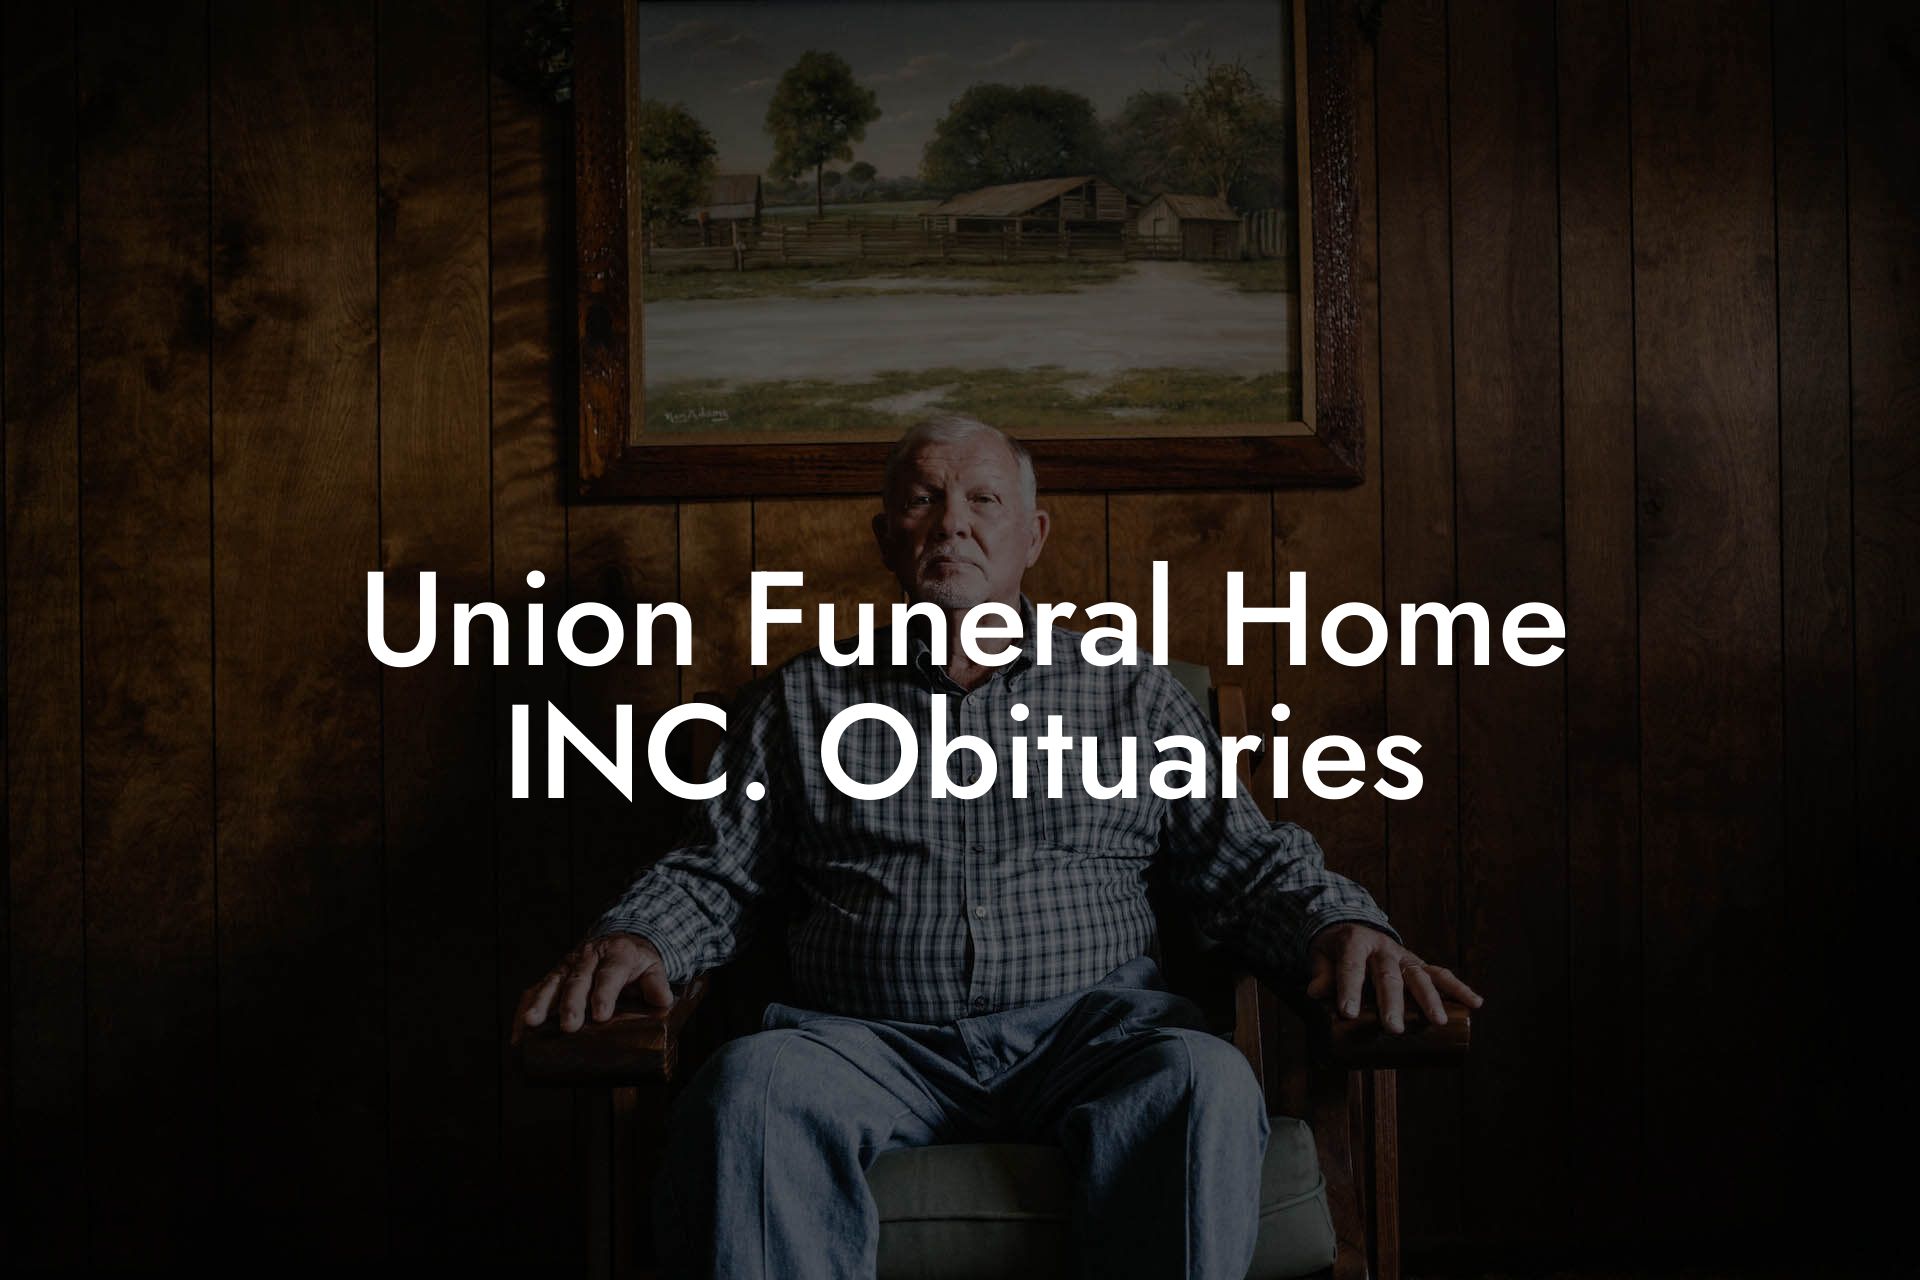 Union Funeral Home INC. Obituaries